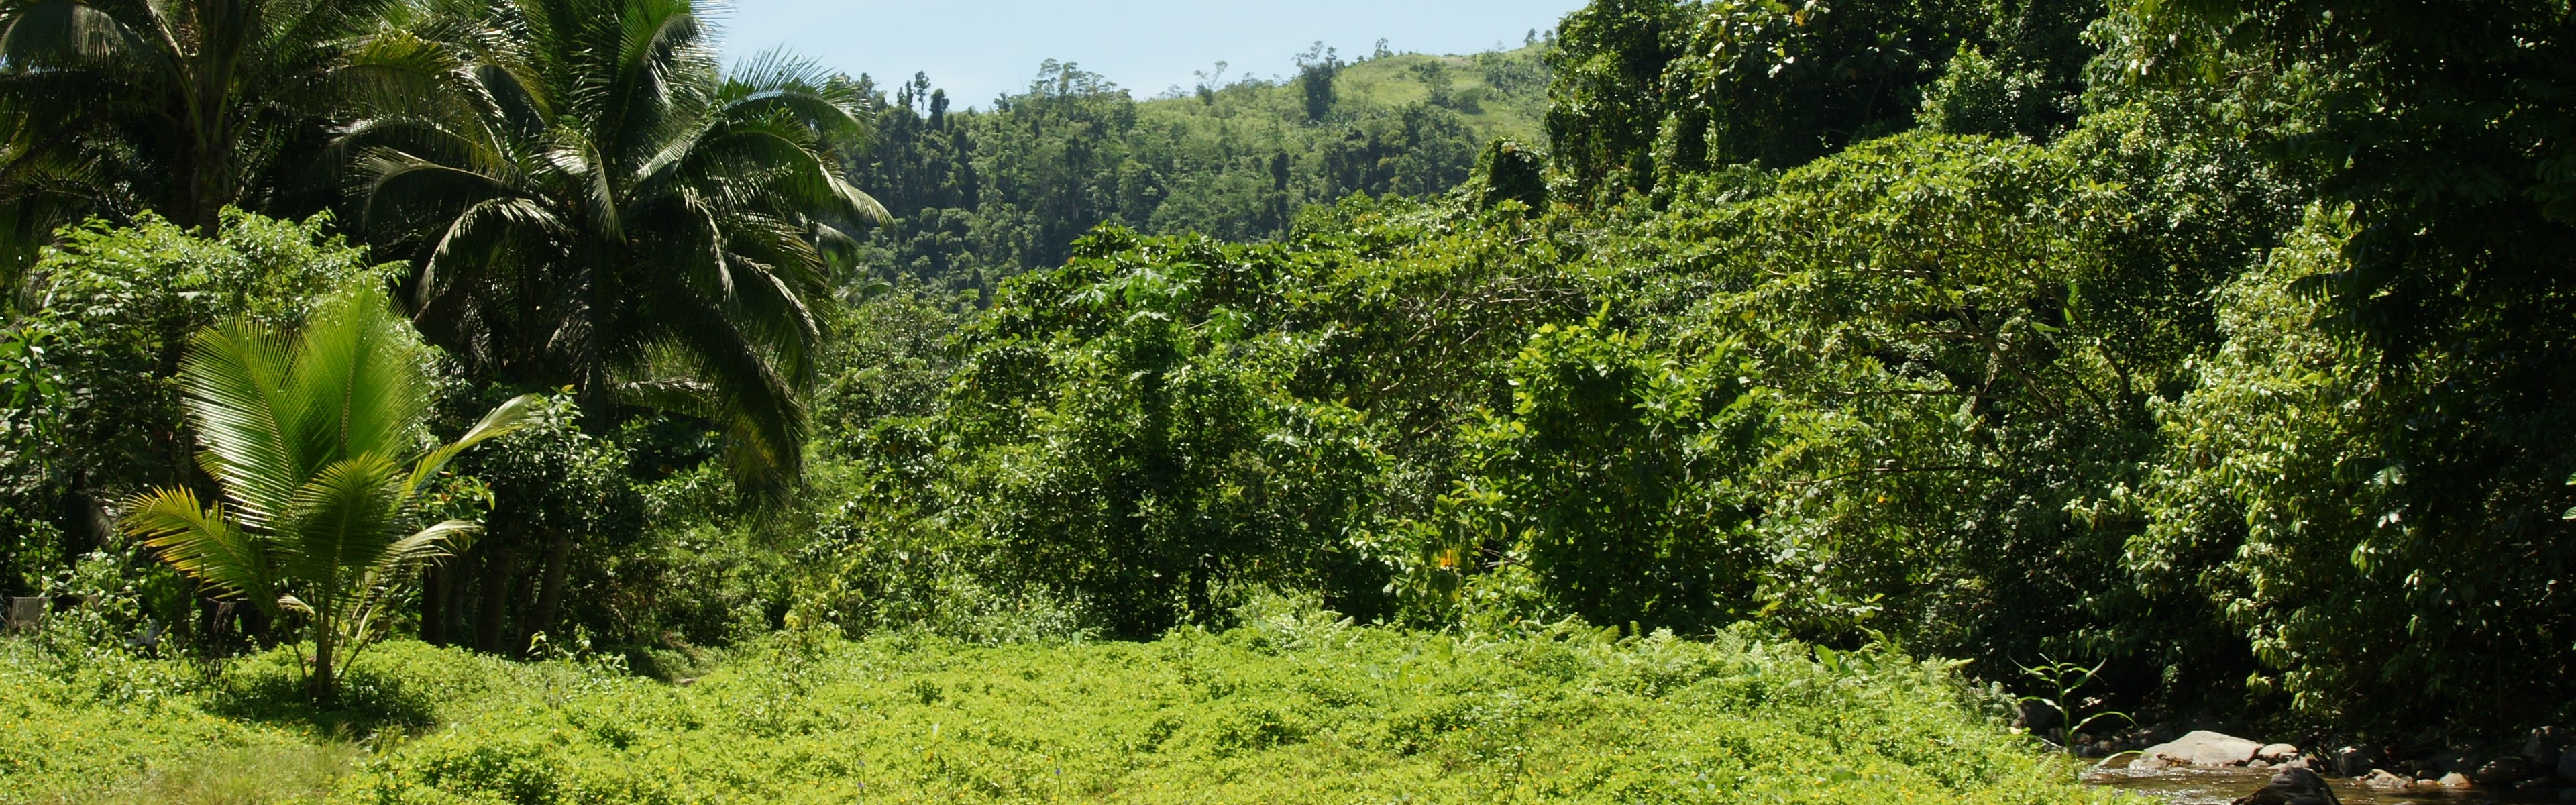 Dual monitor background Tropical nature river jungle vegetation